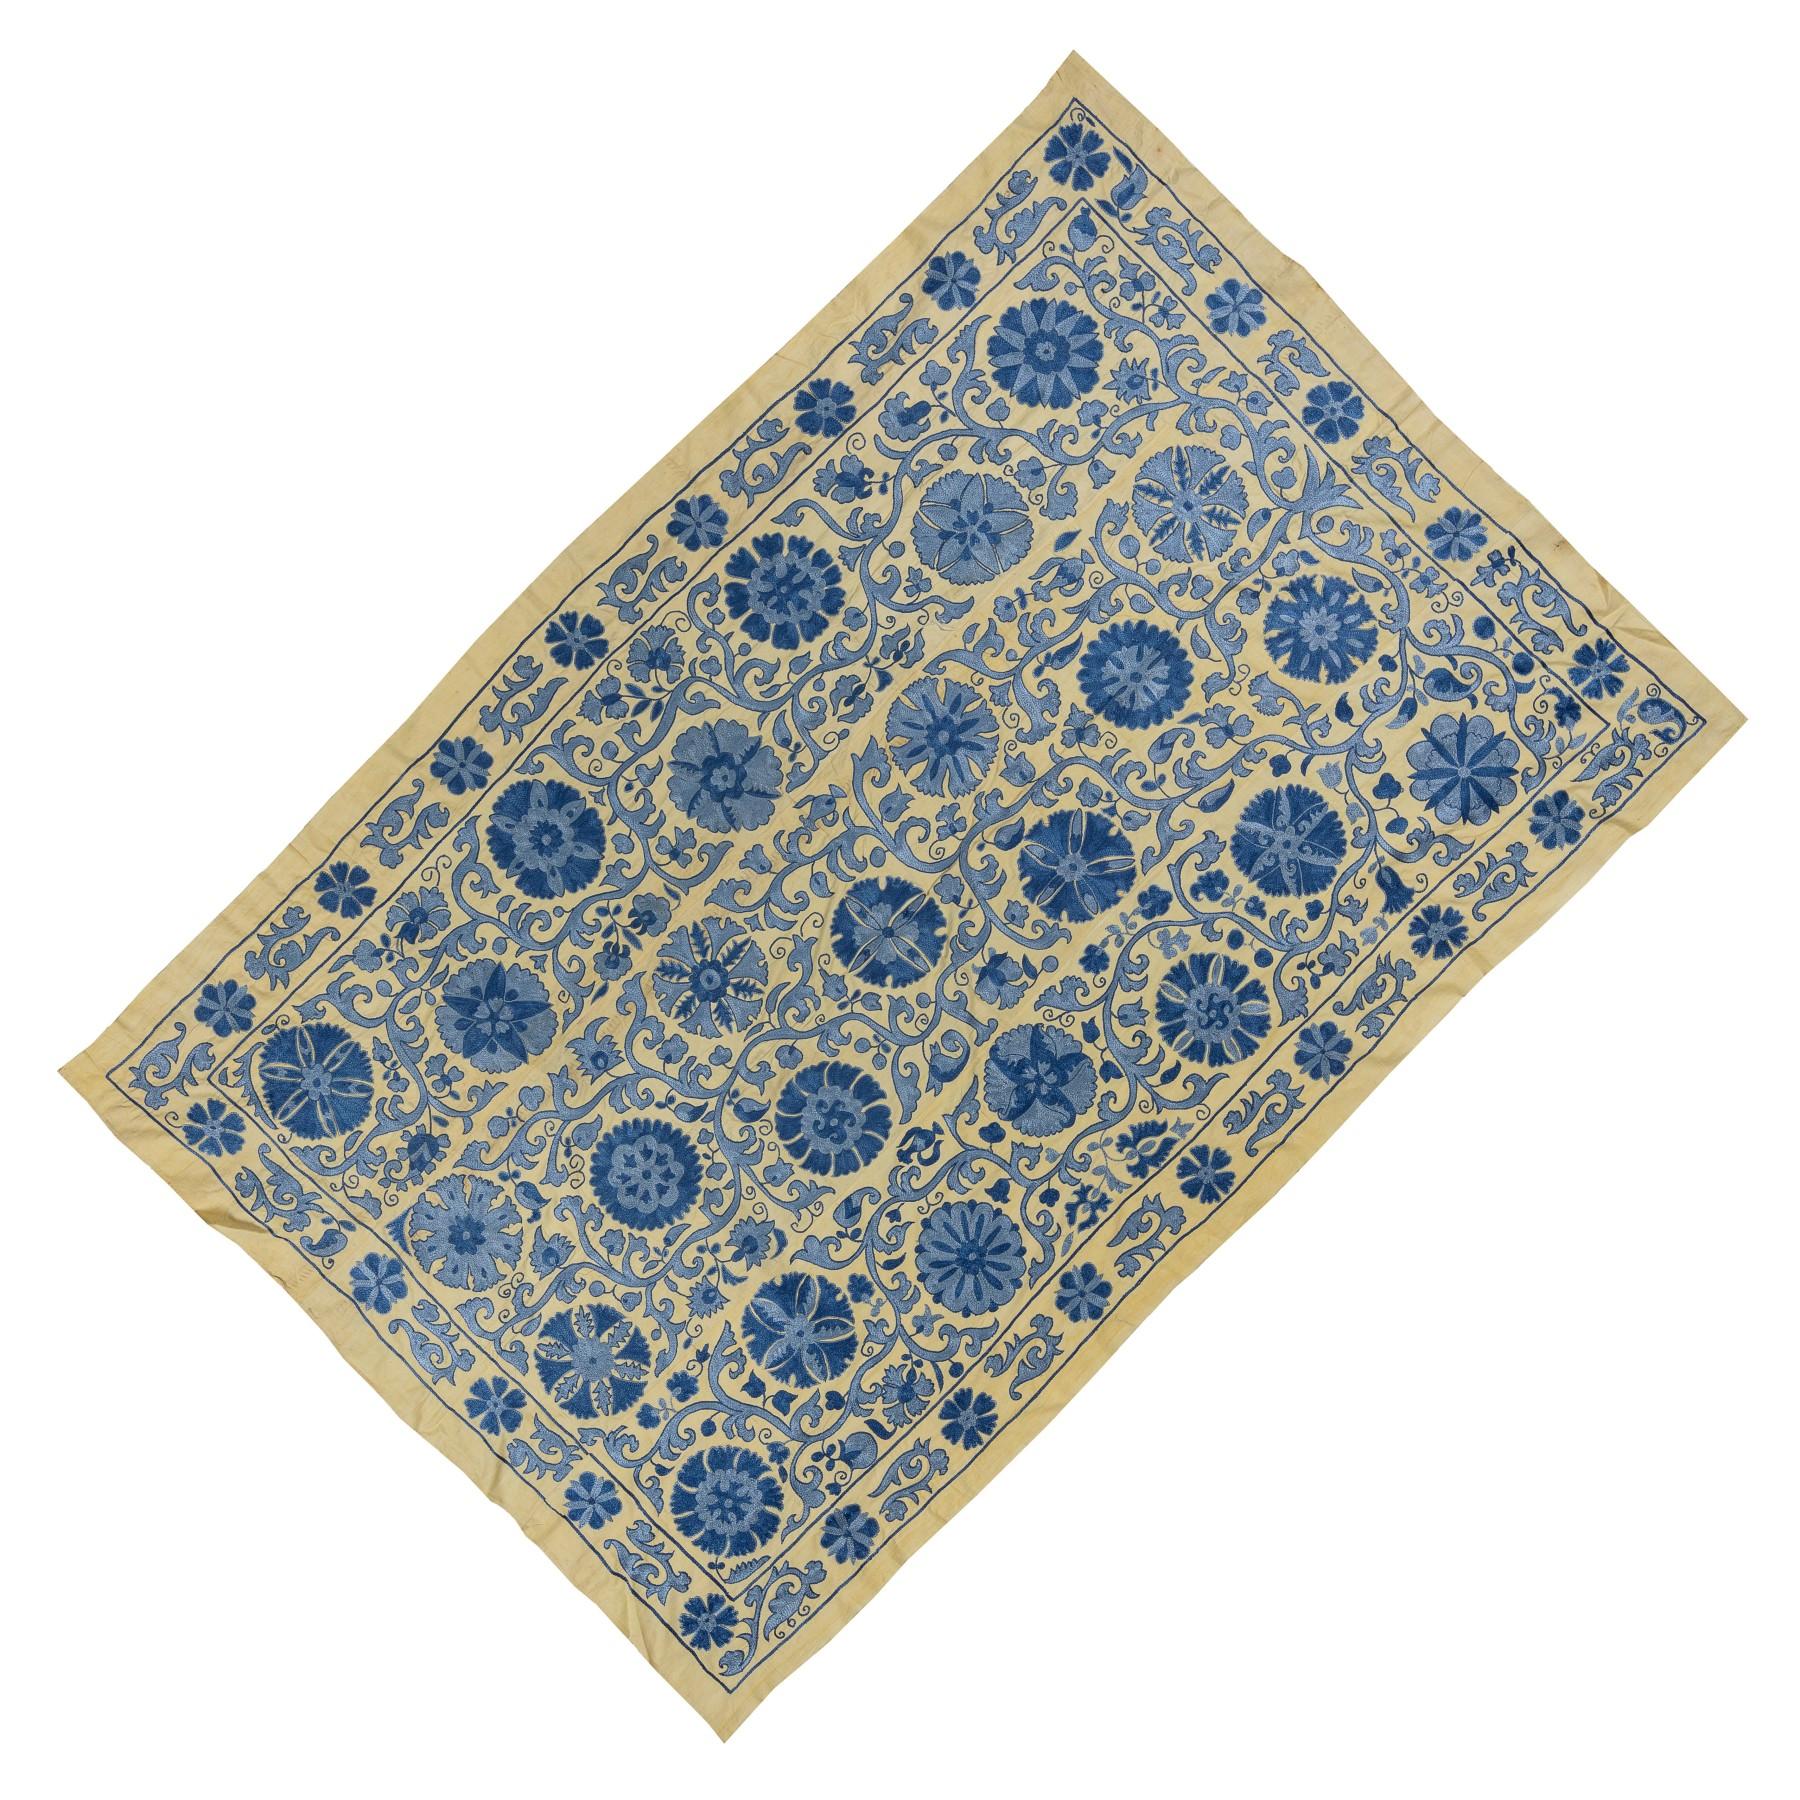 Decorative Uzbek Suzani Textile, Embroidered Cotton & Silk Wall Hanging For Sale 1